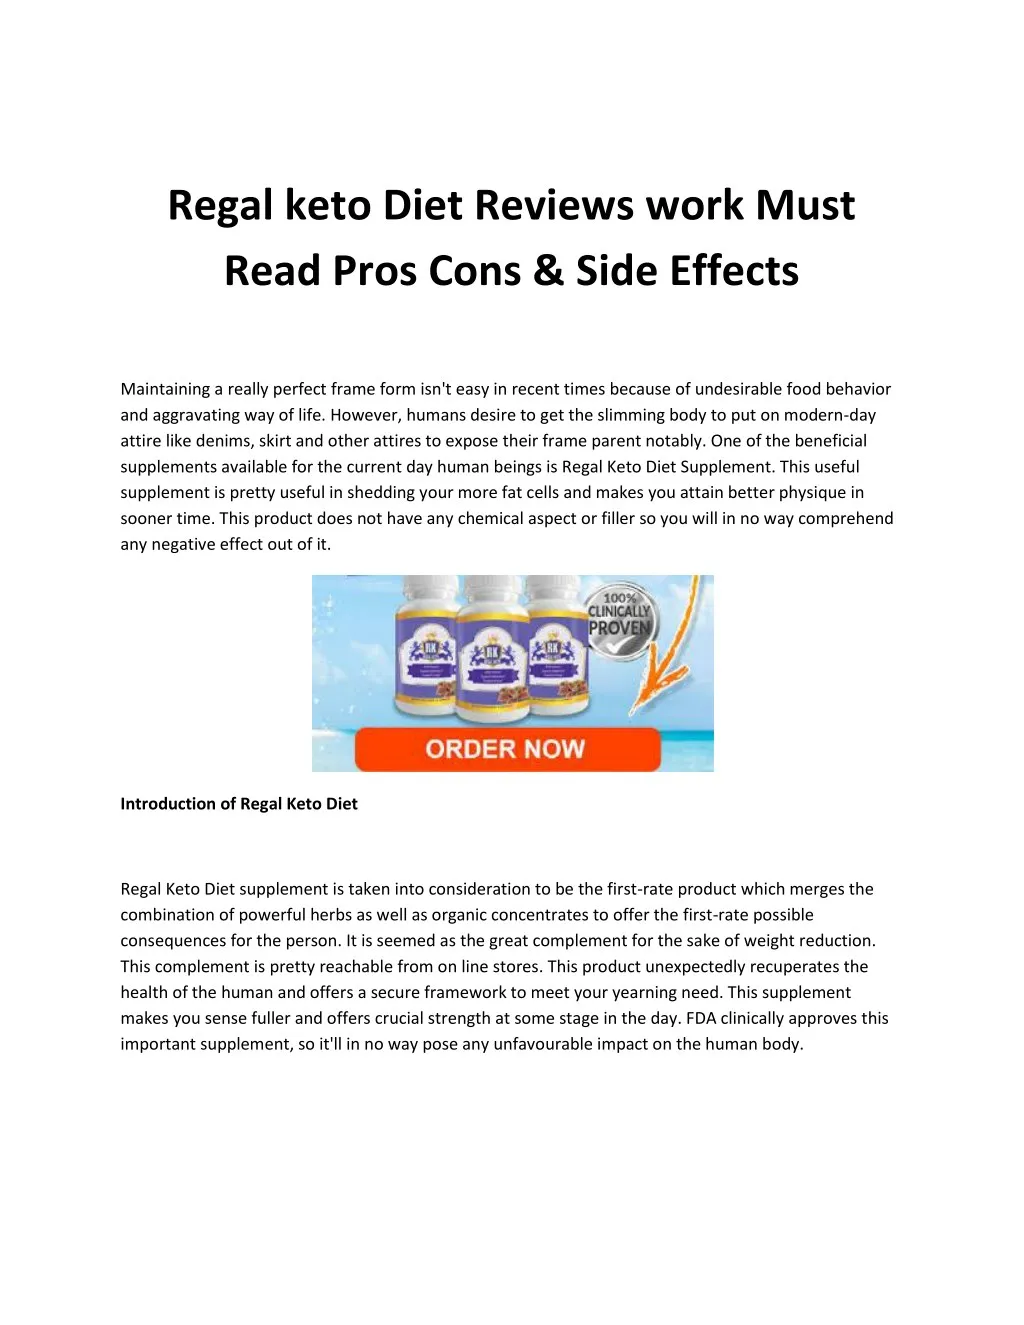 regal keto diet reviews work must read pros cons